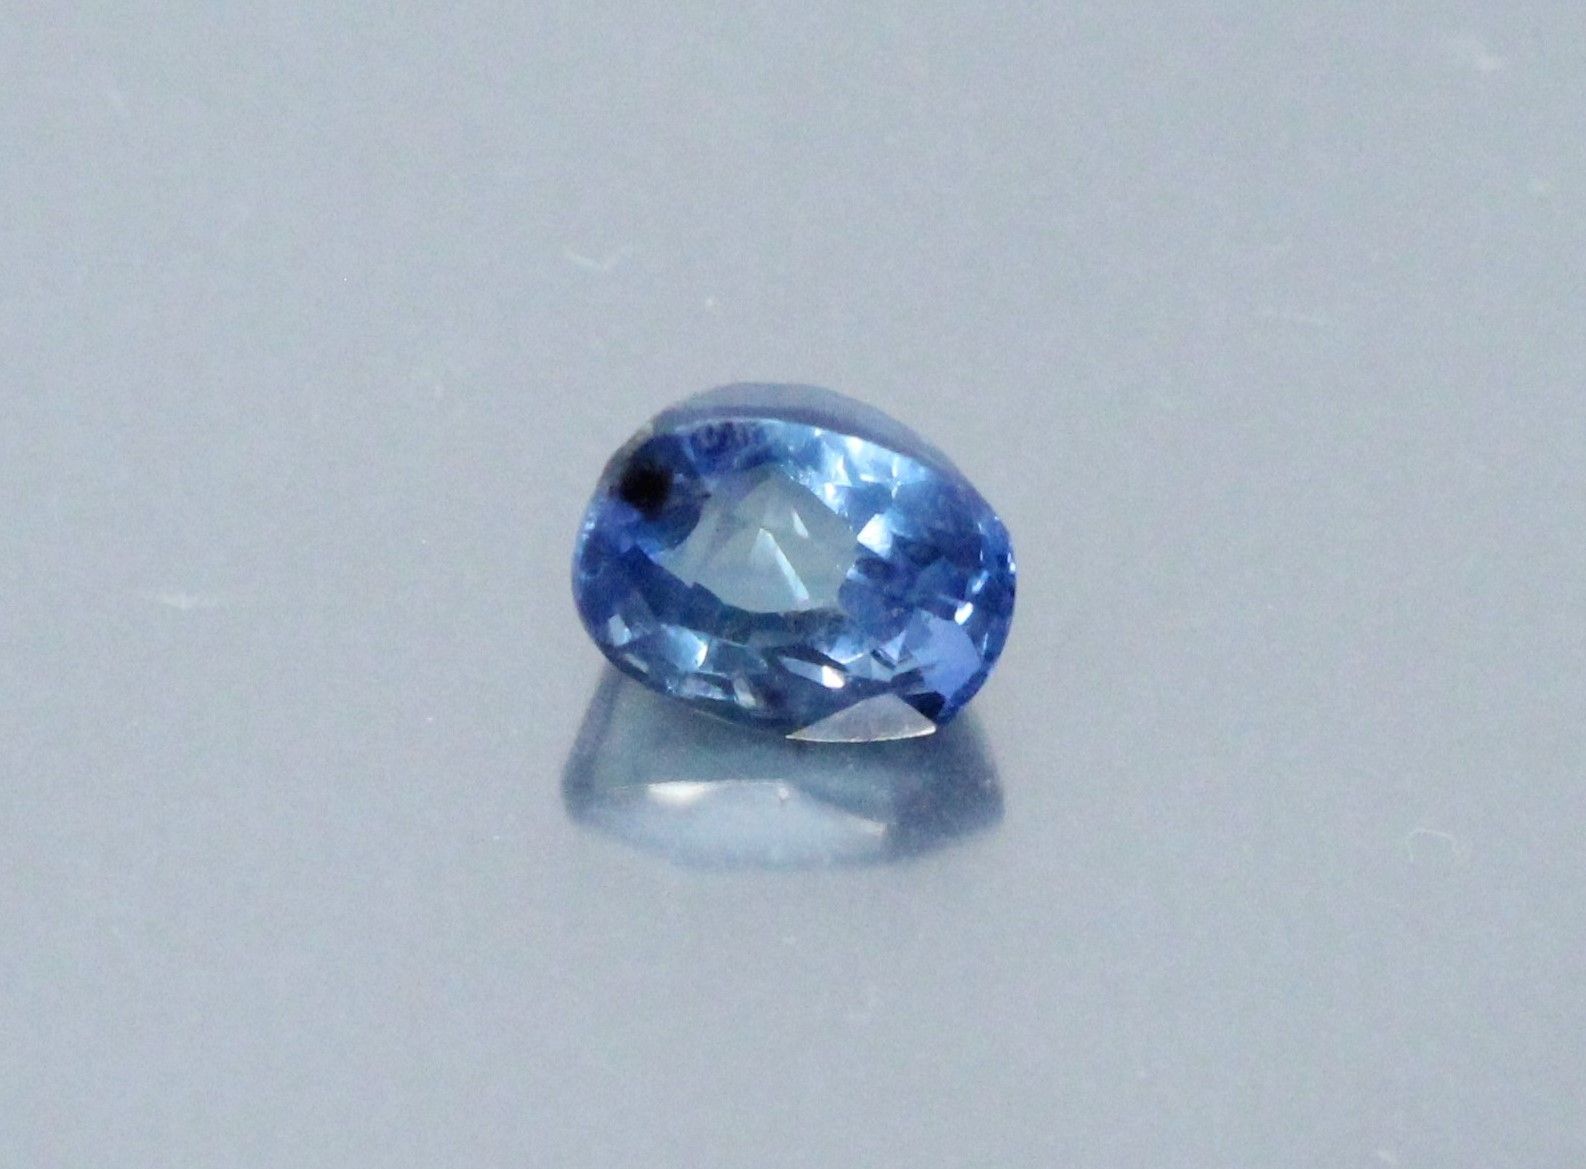 Null 椭圆形蓝宝石，纸质。

锡兰未加热。

重量：约2.20克拉。